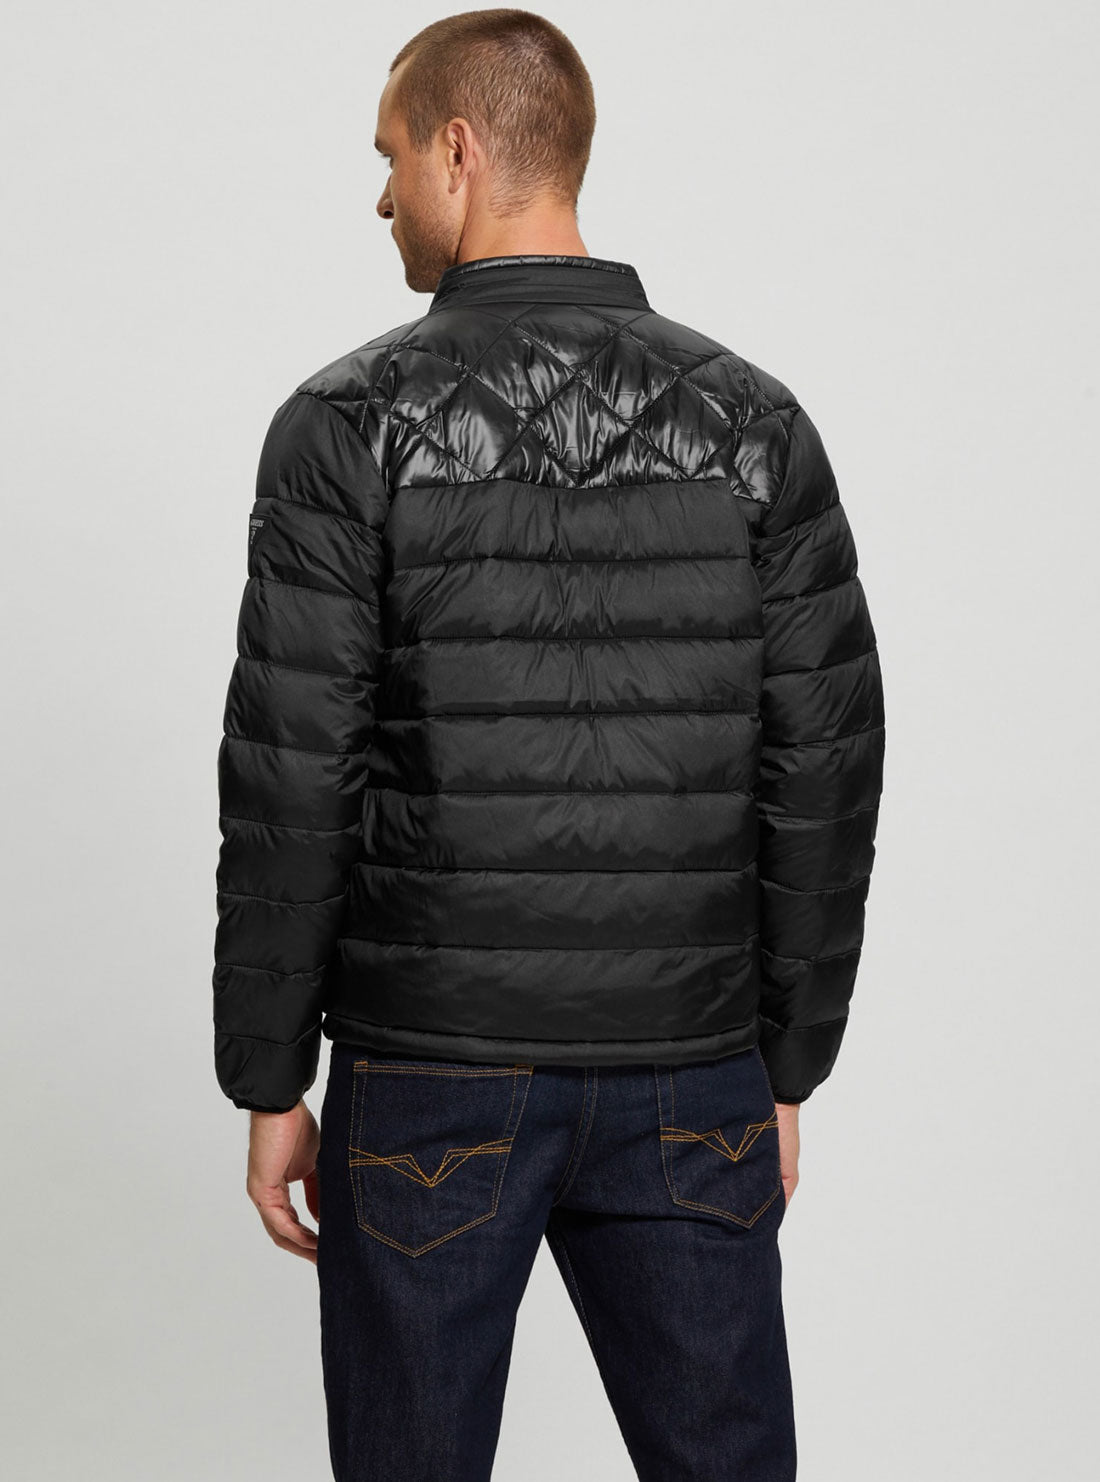 Eco Black Lightweight Puffer Jacket | GUESS men's apparel | back view